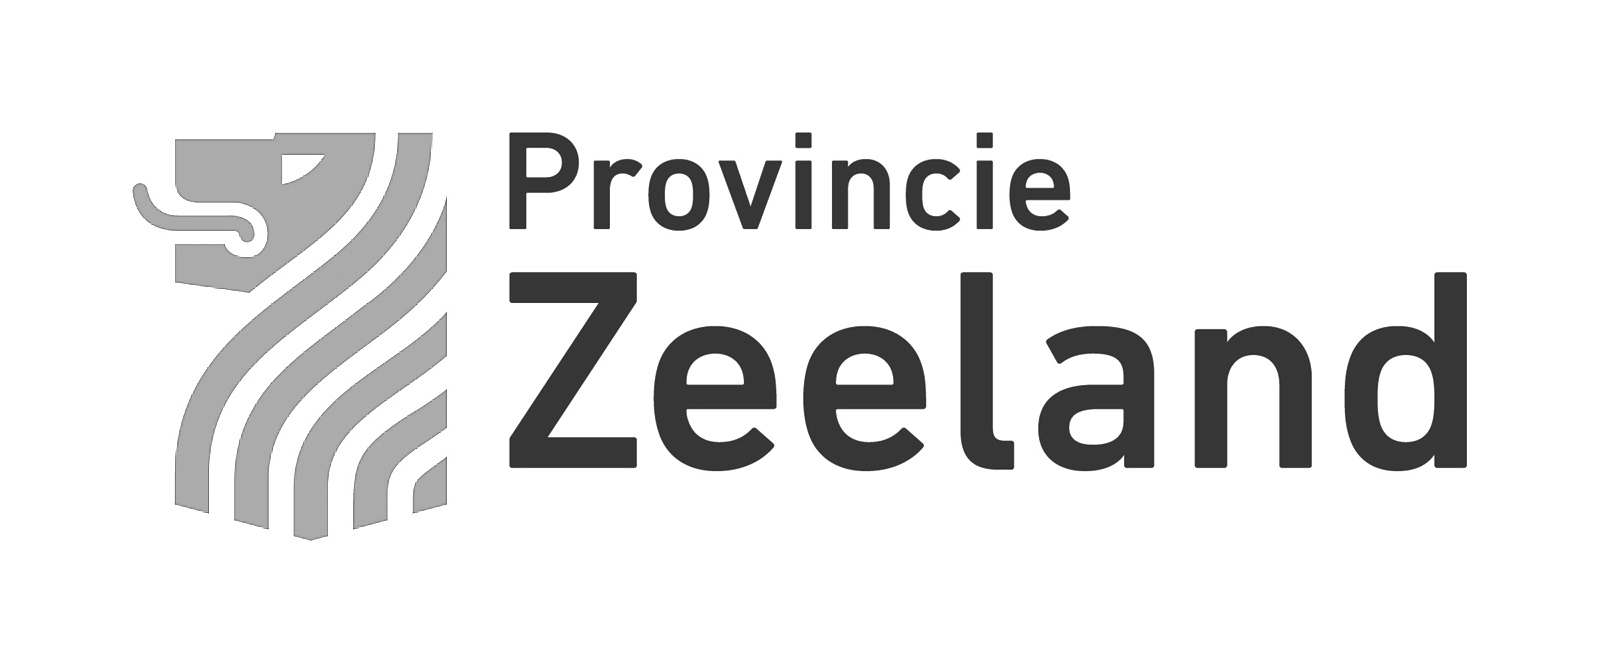 Provincie Zeeland logo.jpg